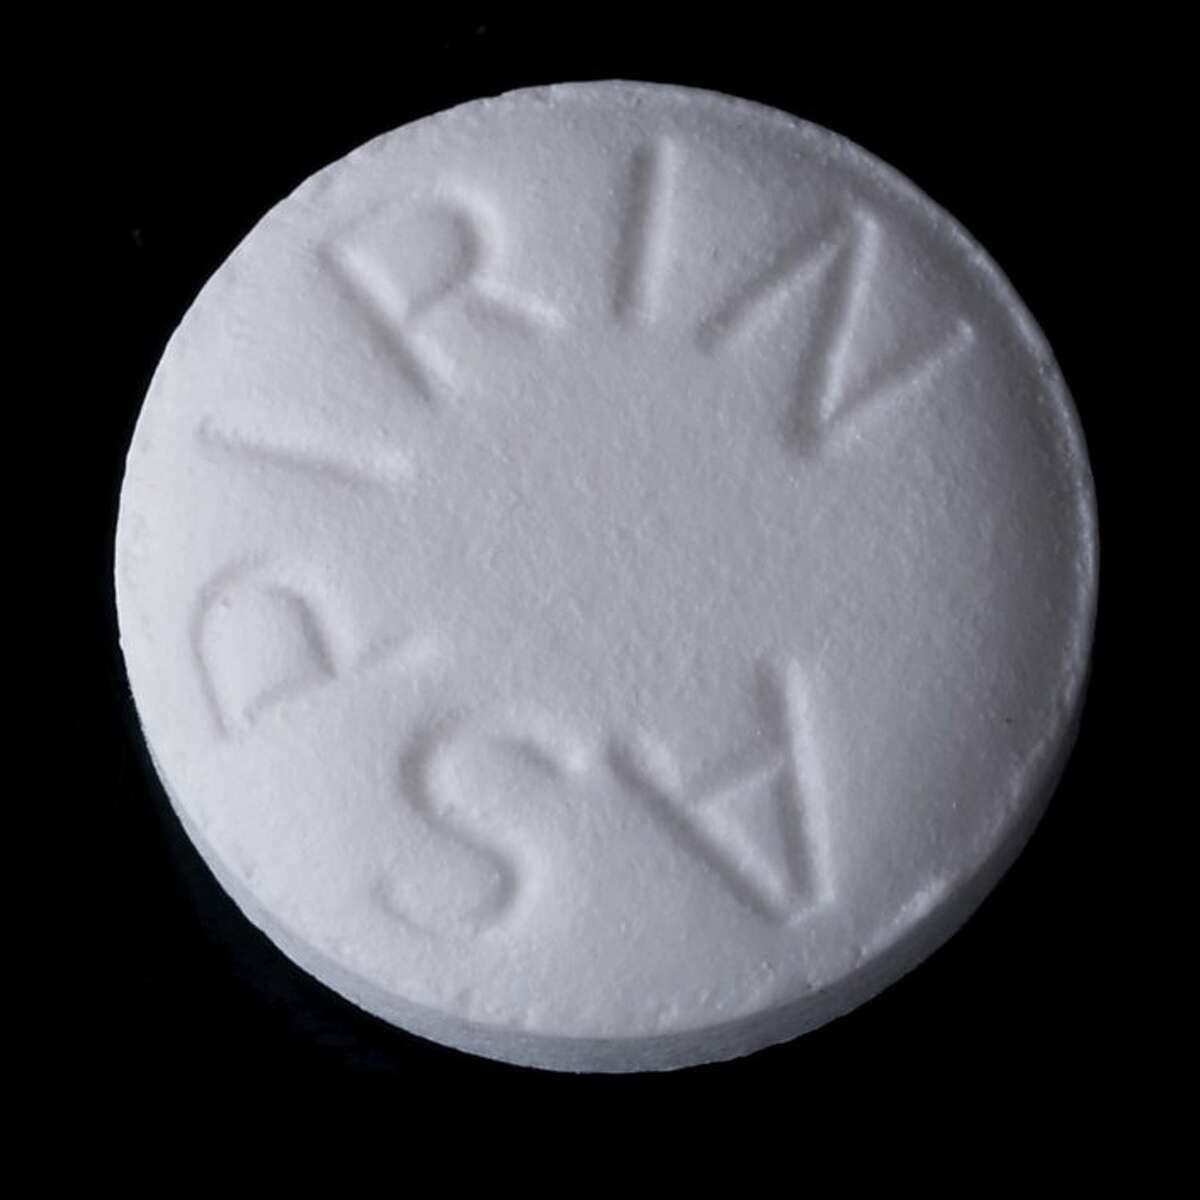 Closeup of Aspirin pill Jim DeLillo / iStockphoto.com